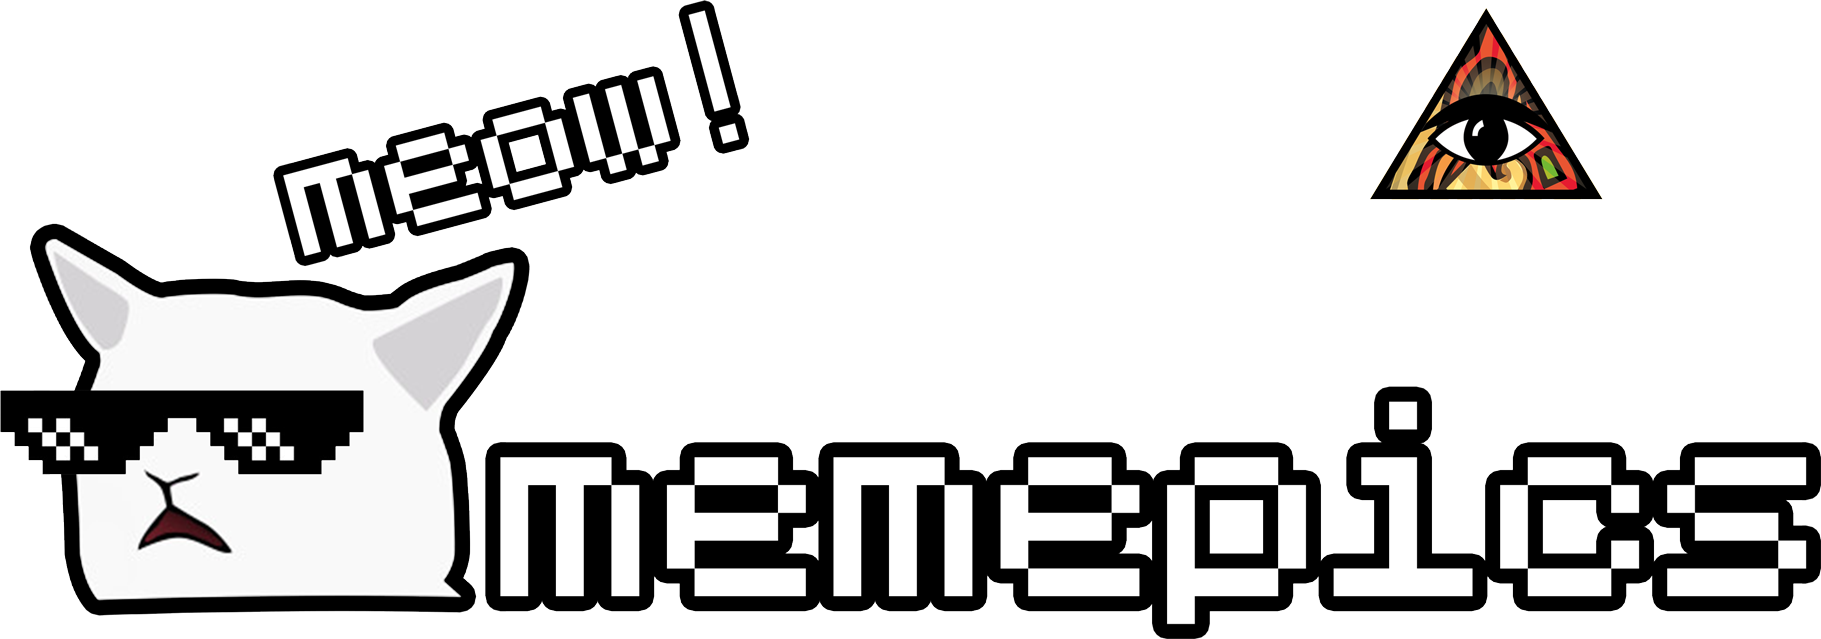 memepics